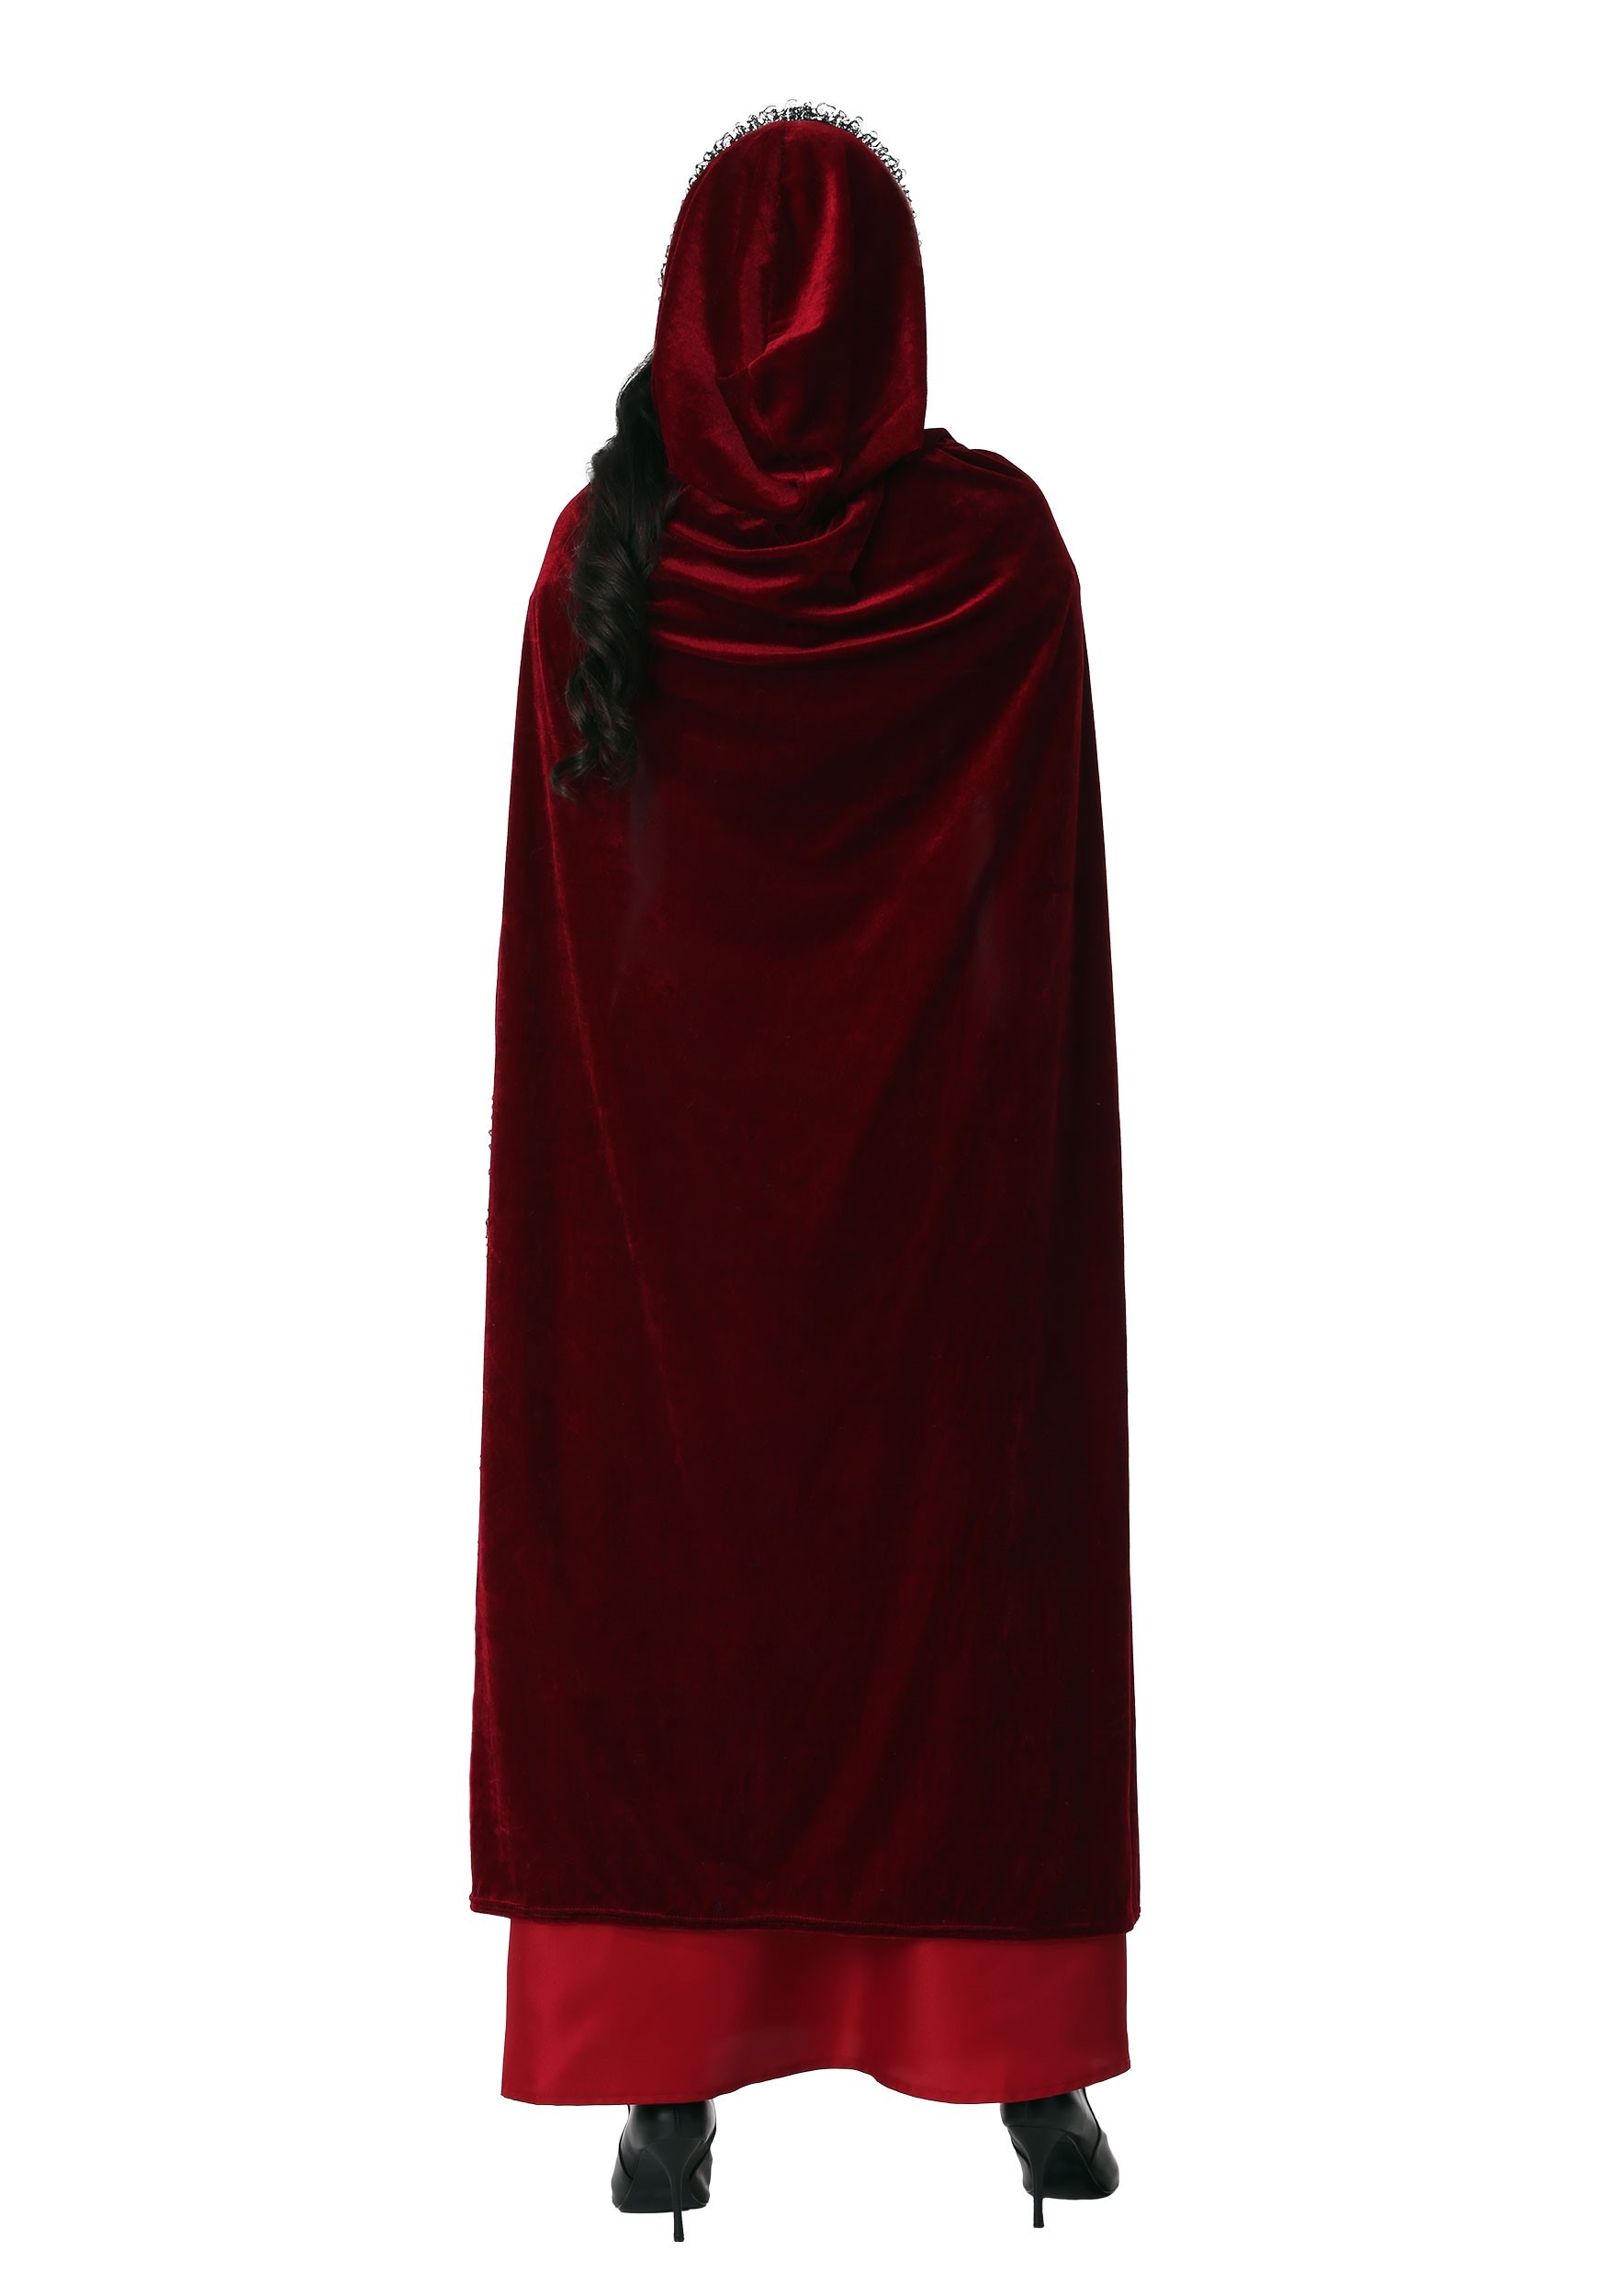 Plus Size Ravishing Red Riding Hood Women's Fancy Dress Costume